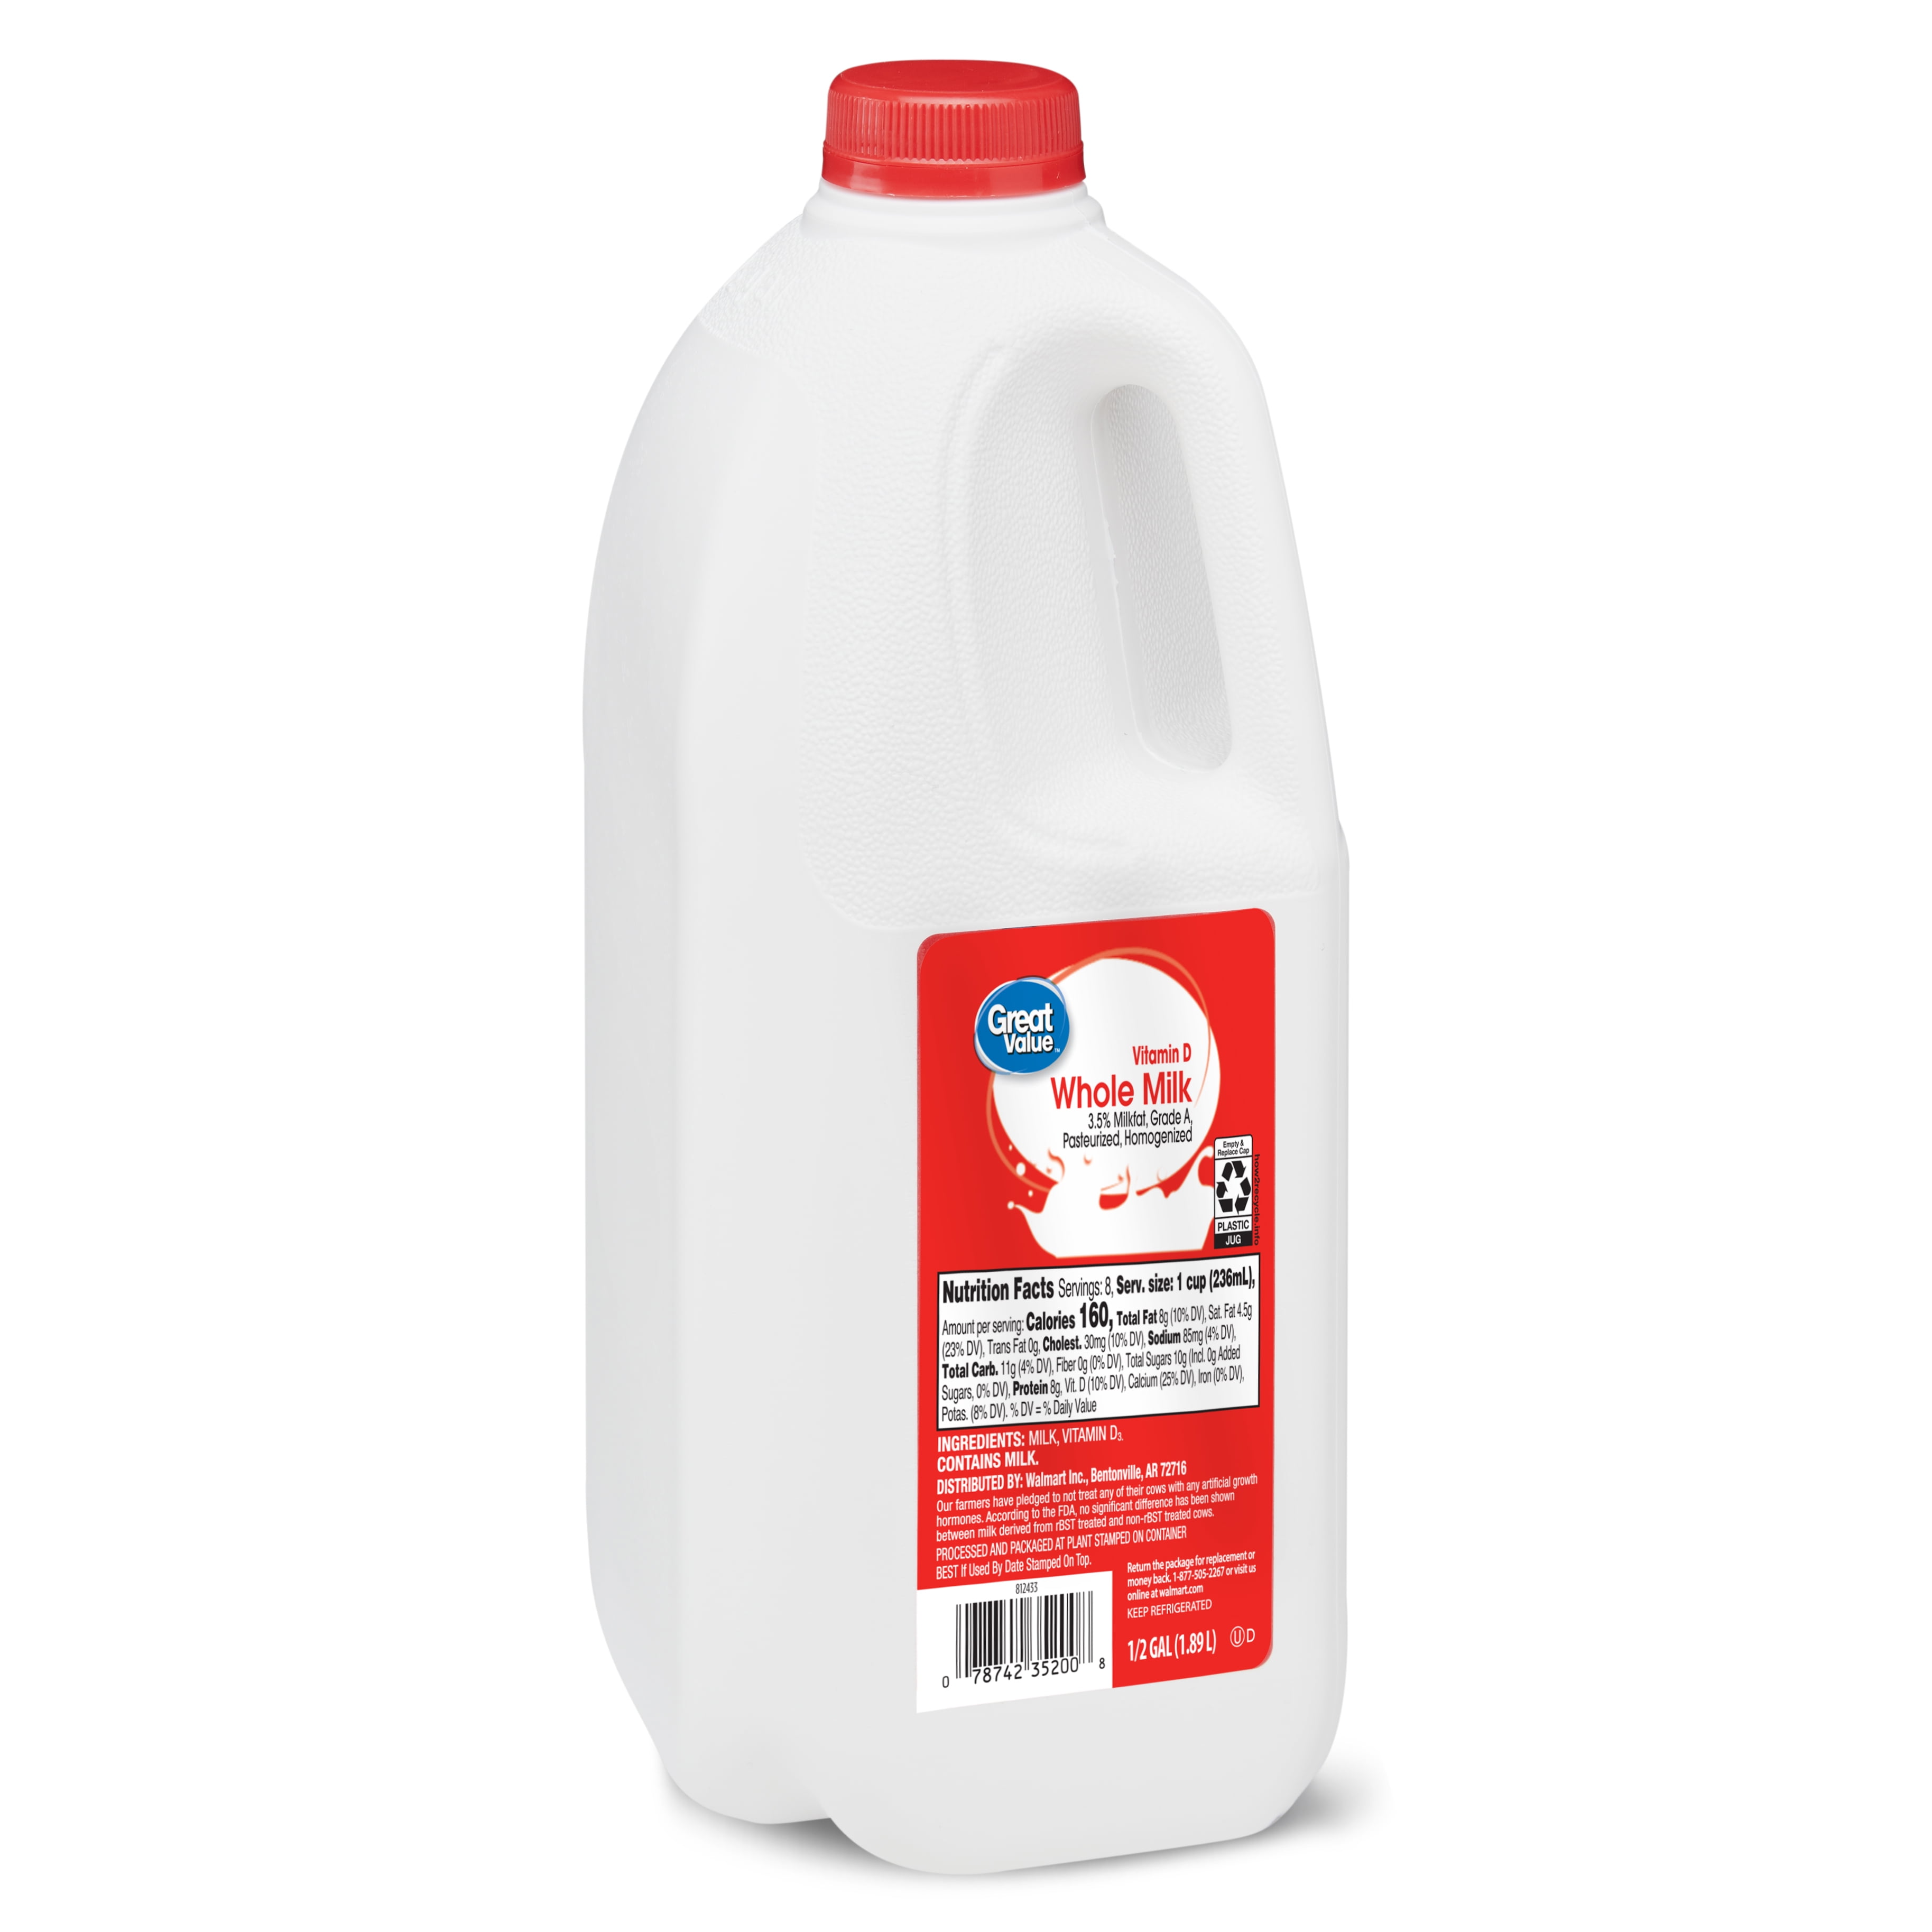 Diez años insuficiente puñetazo Great Value Whole Vitamin D Milk, Half Gallon, 64 fl oz - Walmart.com